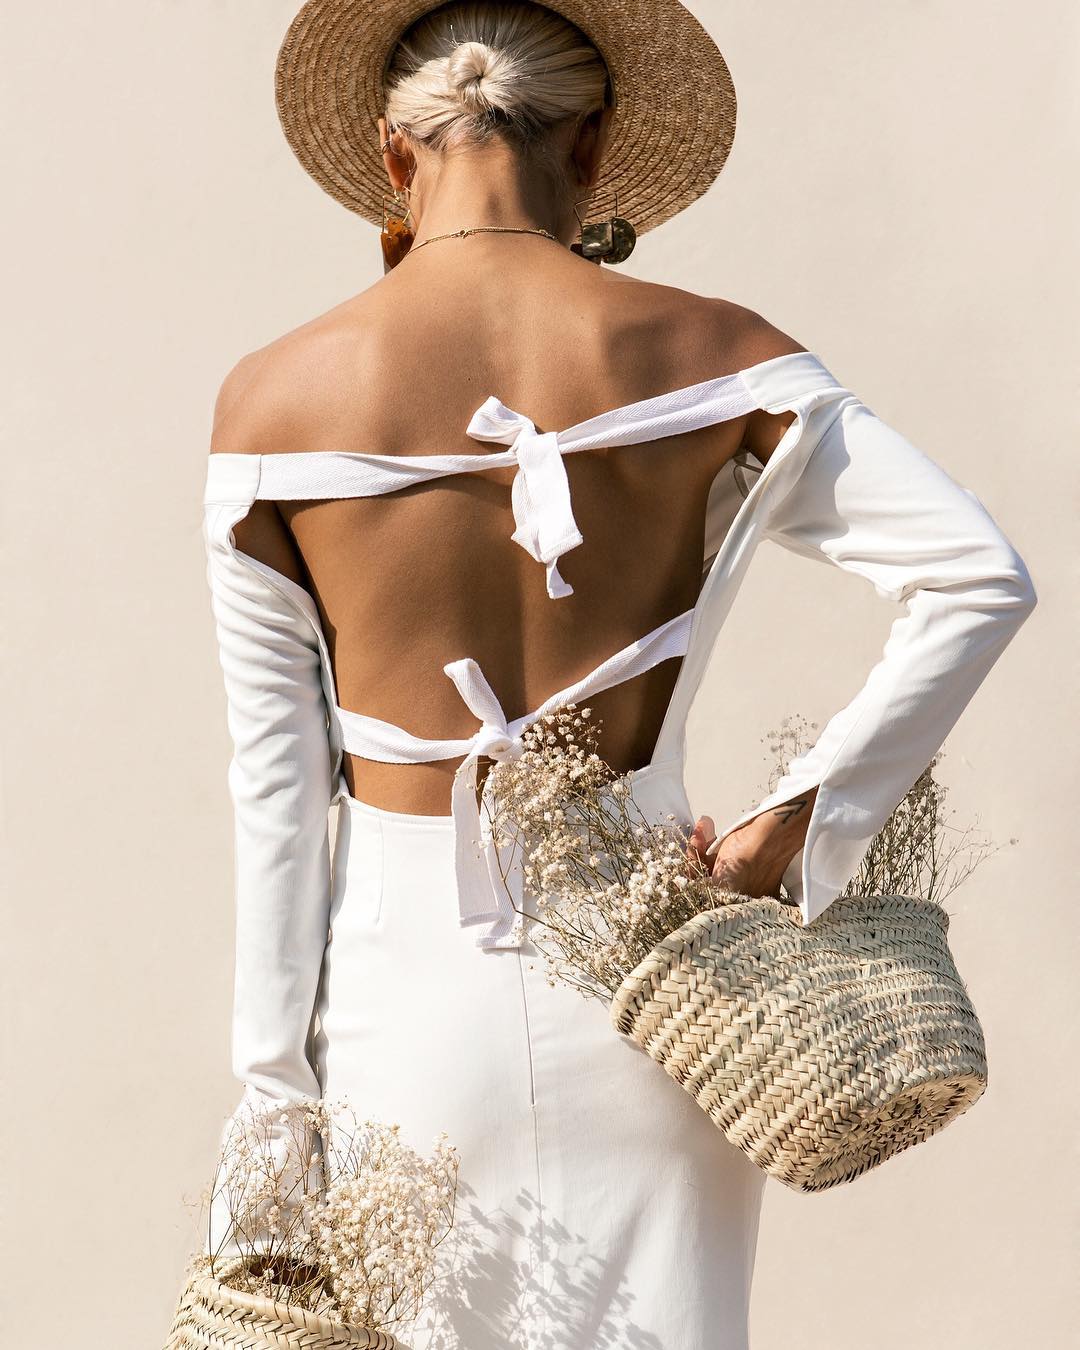 Style Inspiration | The Edit: The Summer Wicker Handbag, Part 2